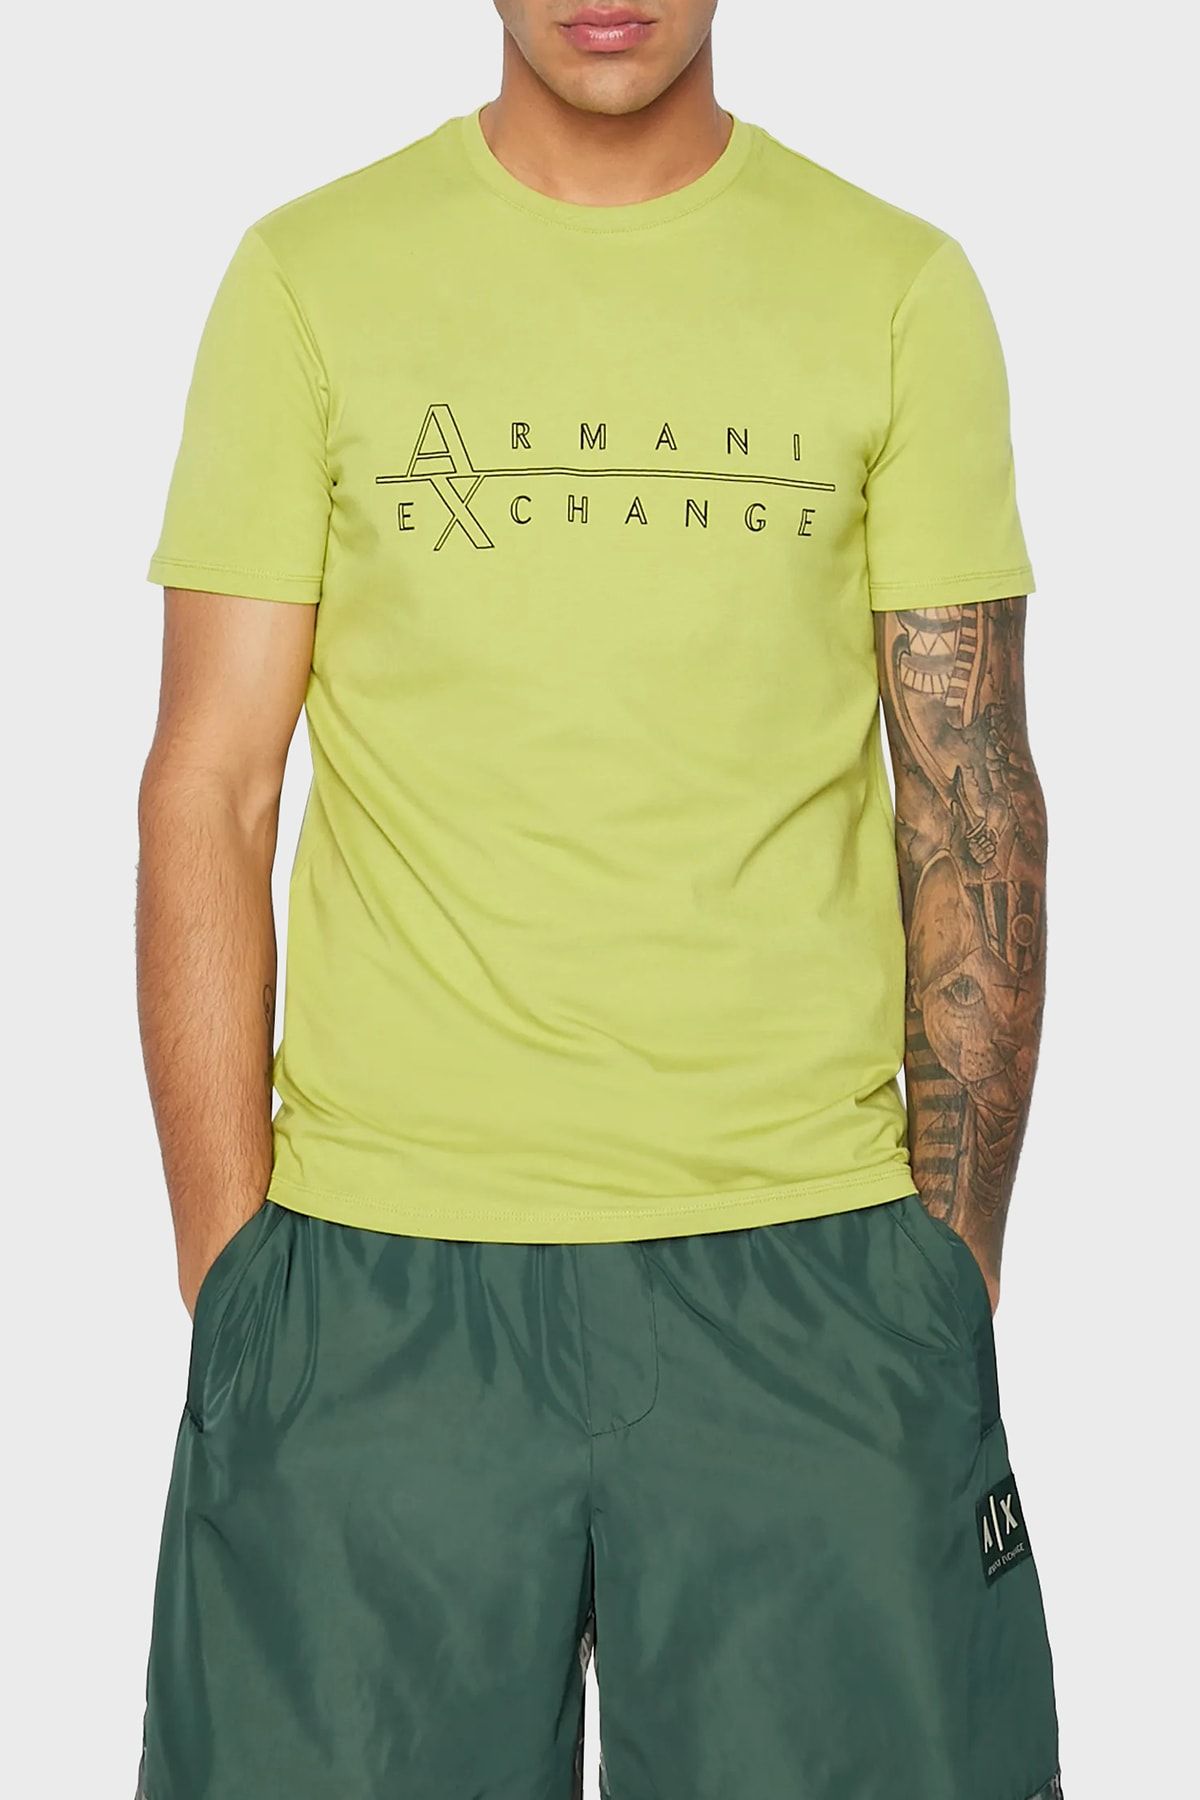 Armani Exchange Pamuklu Slim Fit Bisiklet Yaka T Shirt Erkek T Shirt 3rztbr Zjaaz 1883